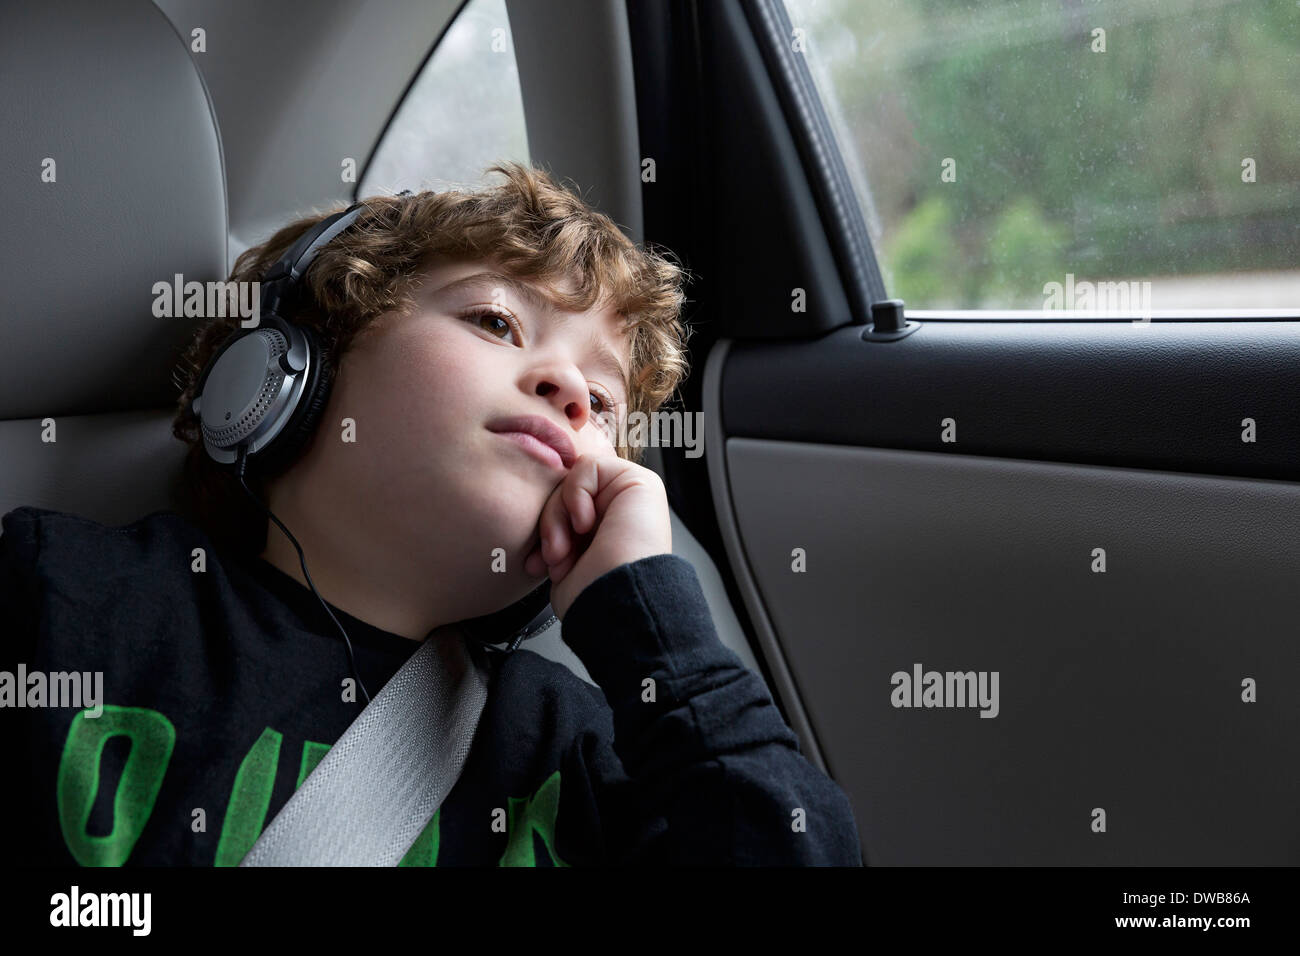 Boy in back seat of car, wearing headphones Stock Photo